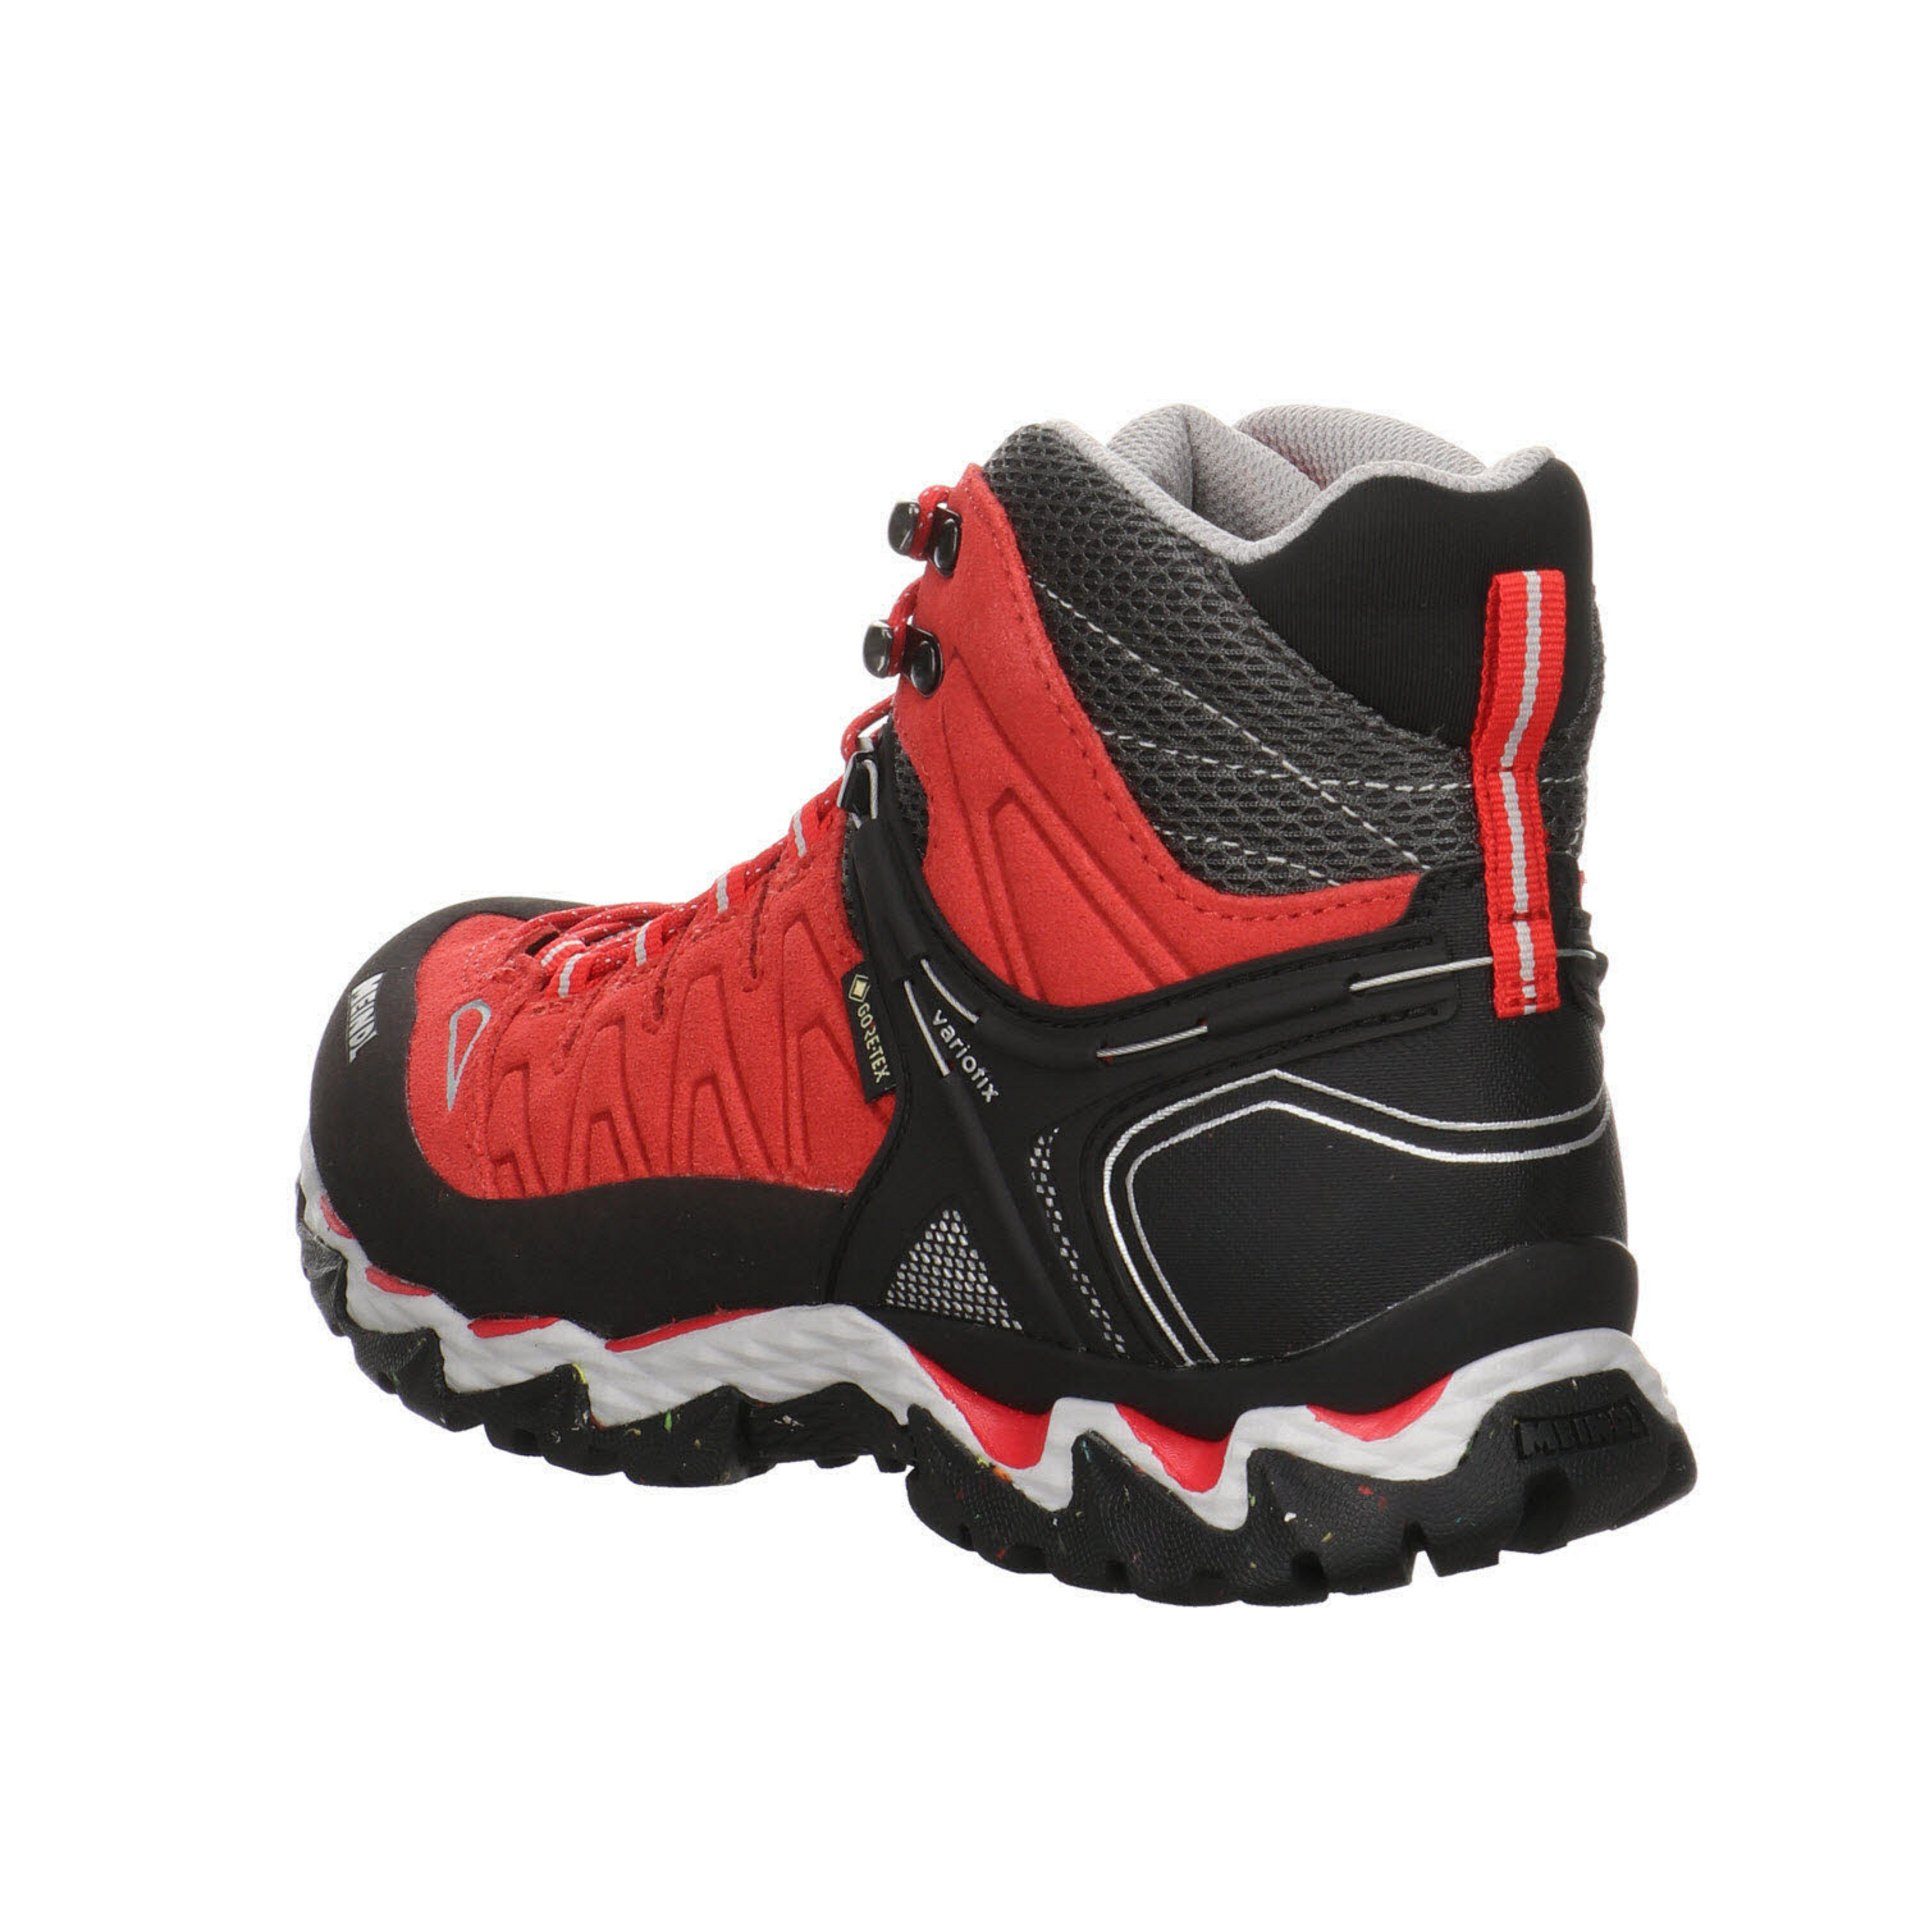 Schuhe Lite Outdoor rot+lila Leder-/Textilkombination Outdoorschuh kombi-schwa Herren Hike Meindl GTX Outdoorschuh